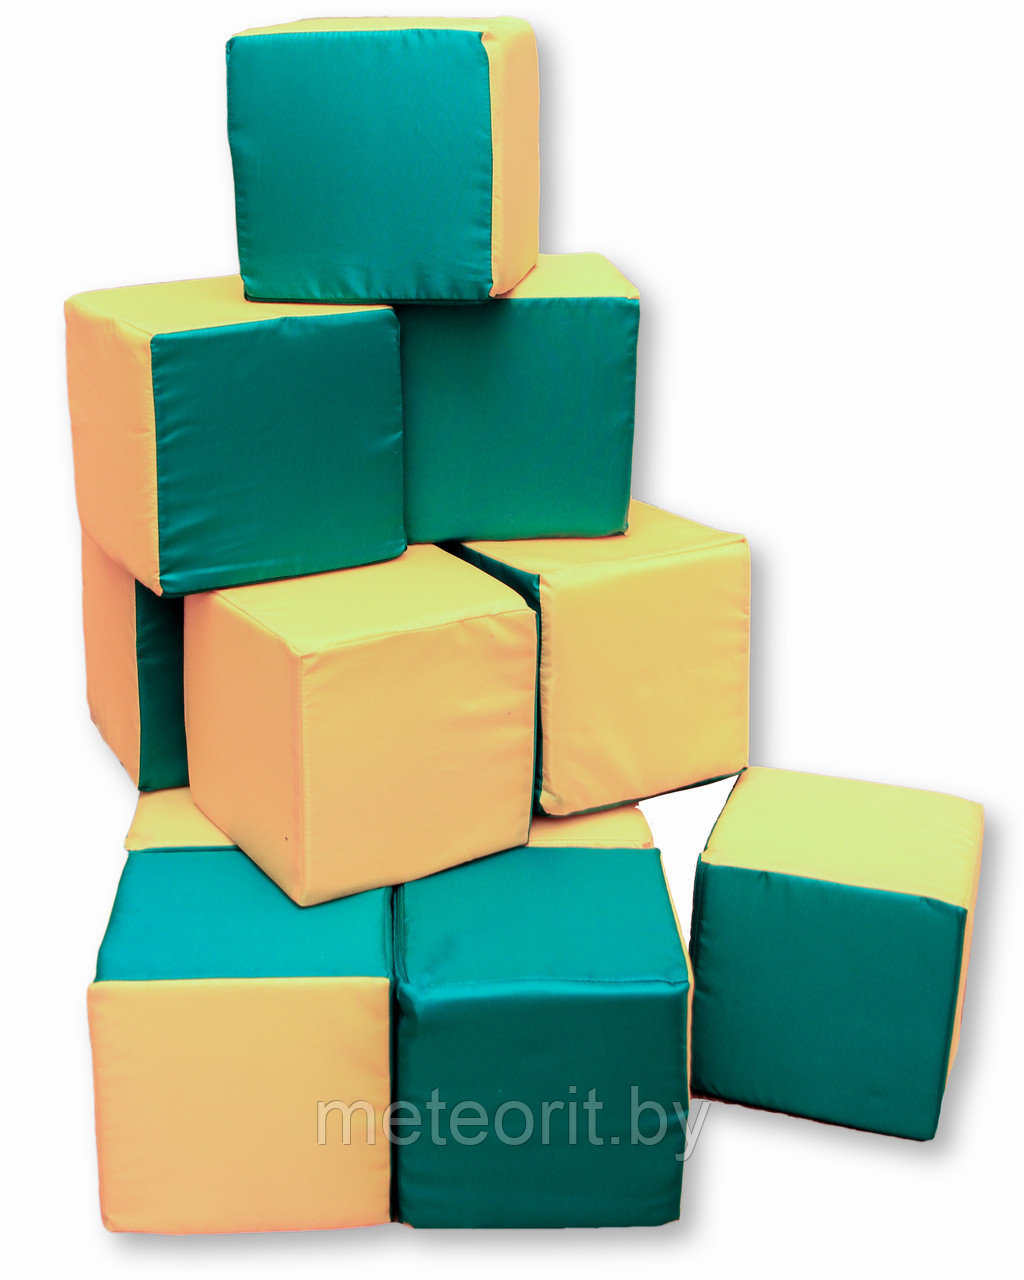 Смекалка (набор кубиков, 8 шт, оксфорд)